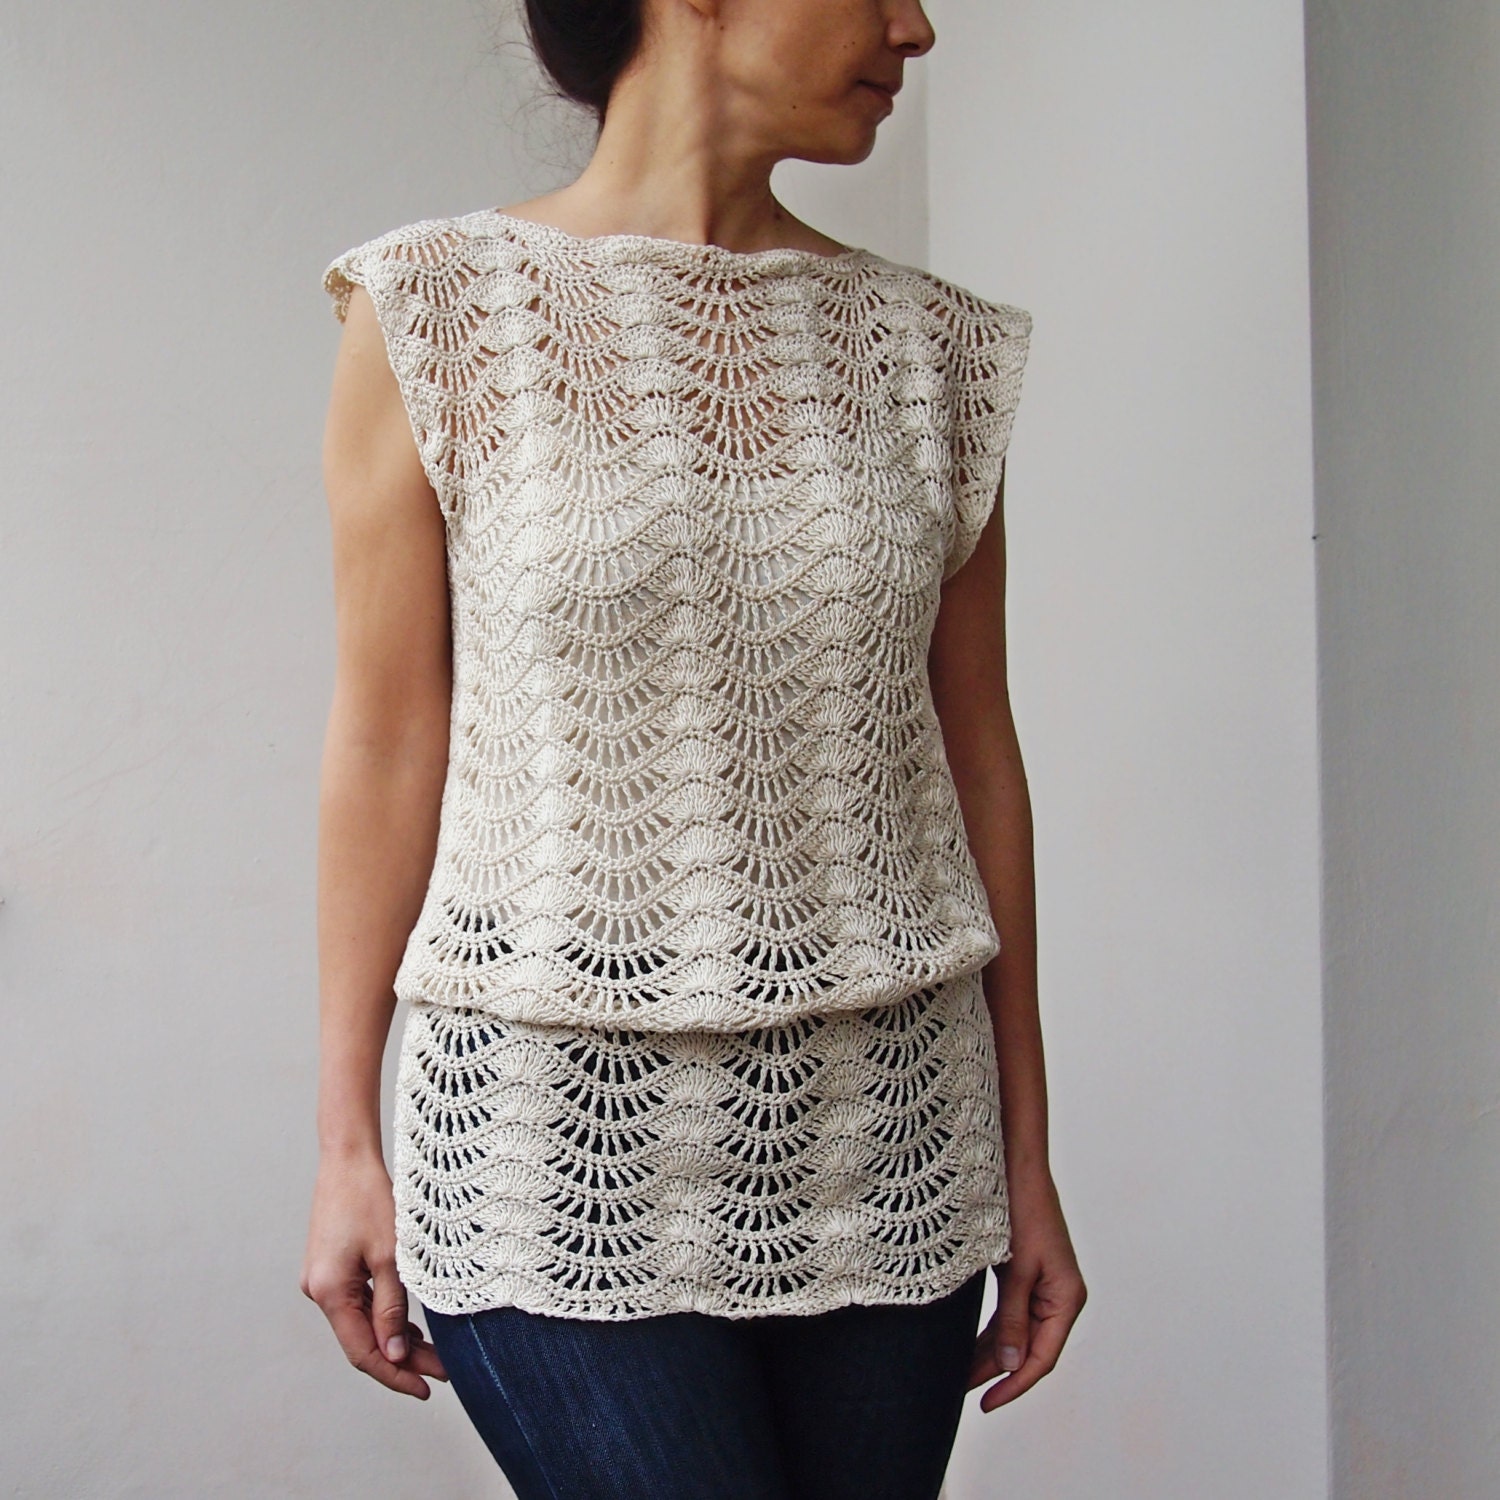 Crochet Pattern Chevron Sweater Tunic Ripples Top Waves | Etsy